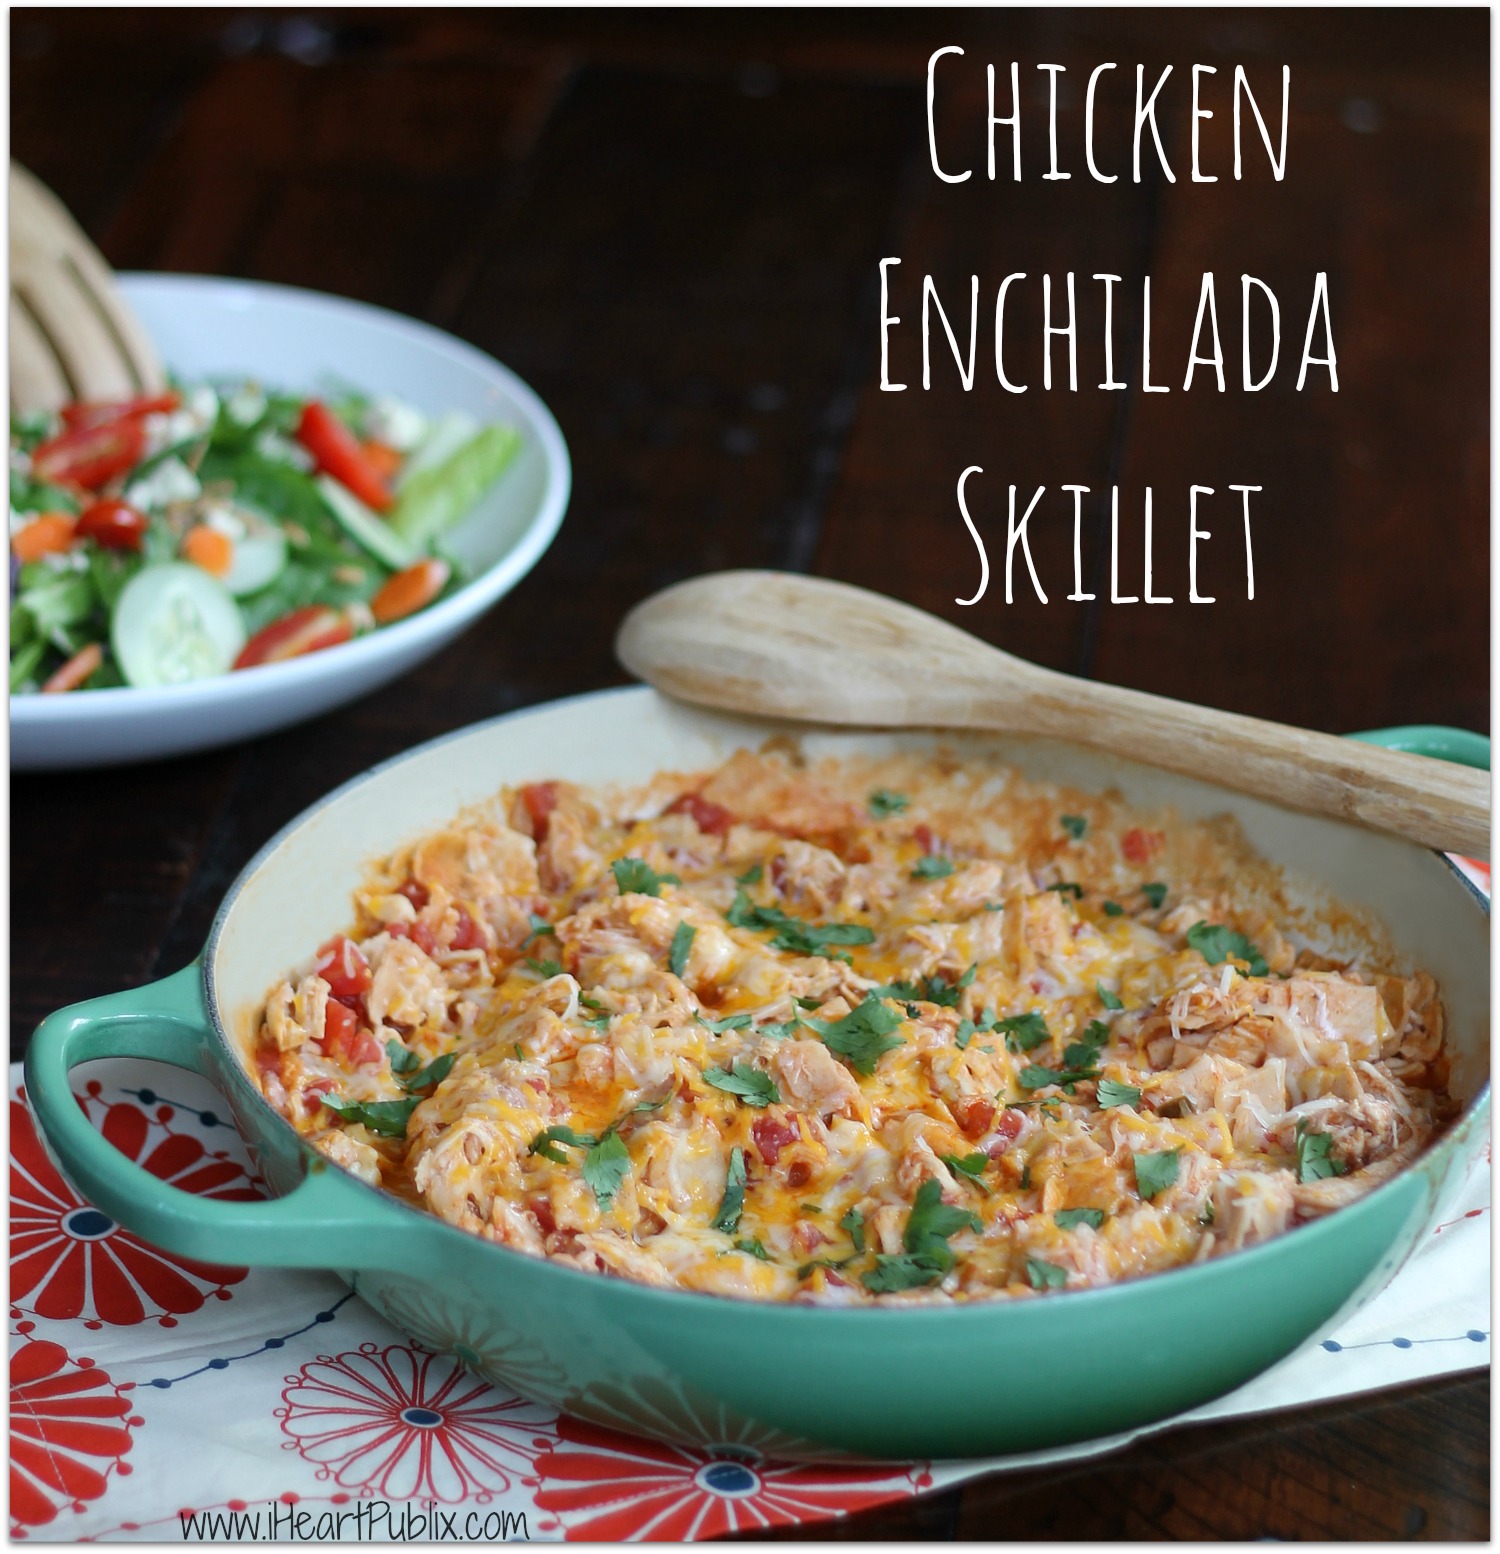 Chicken Enchilada Skillet, I Heart Publix